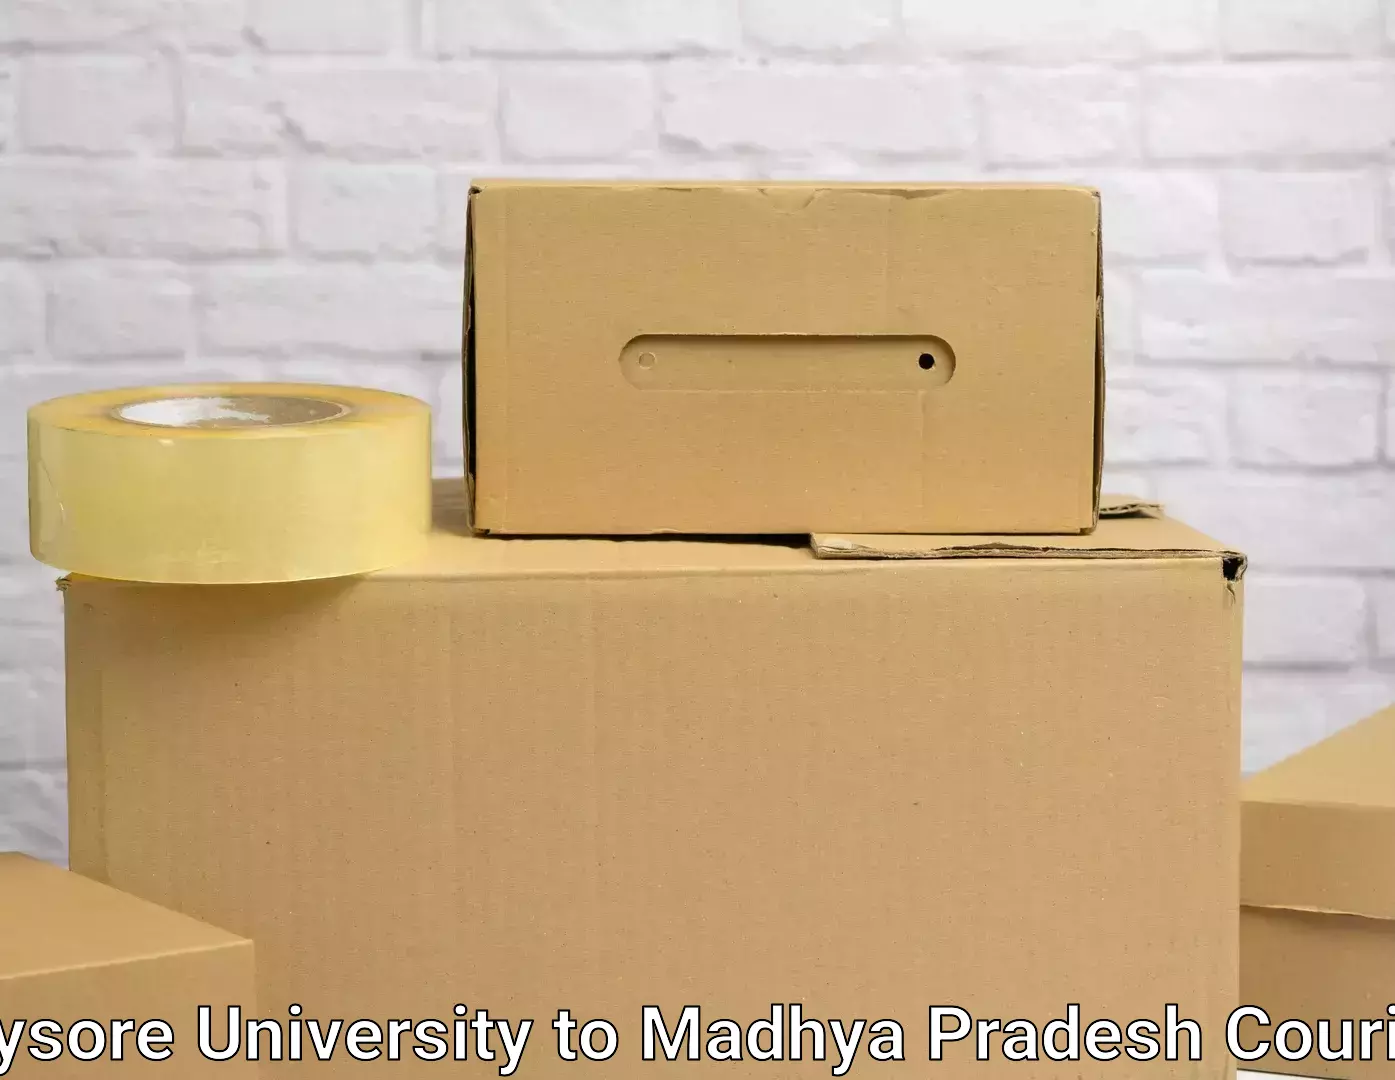 Premium moving services Mysore University to Mandideep